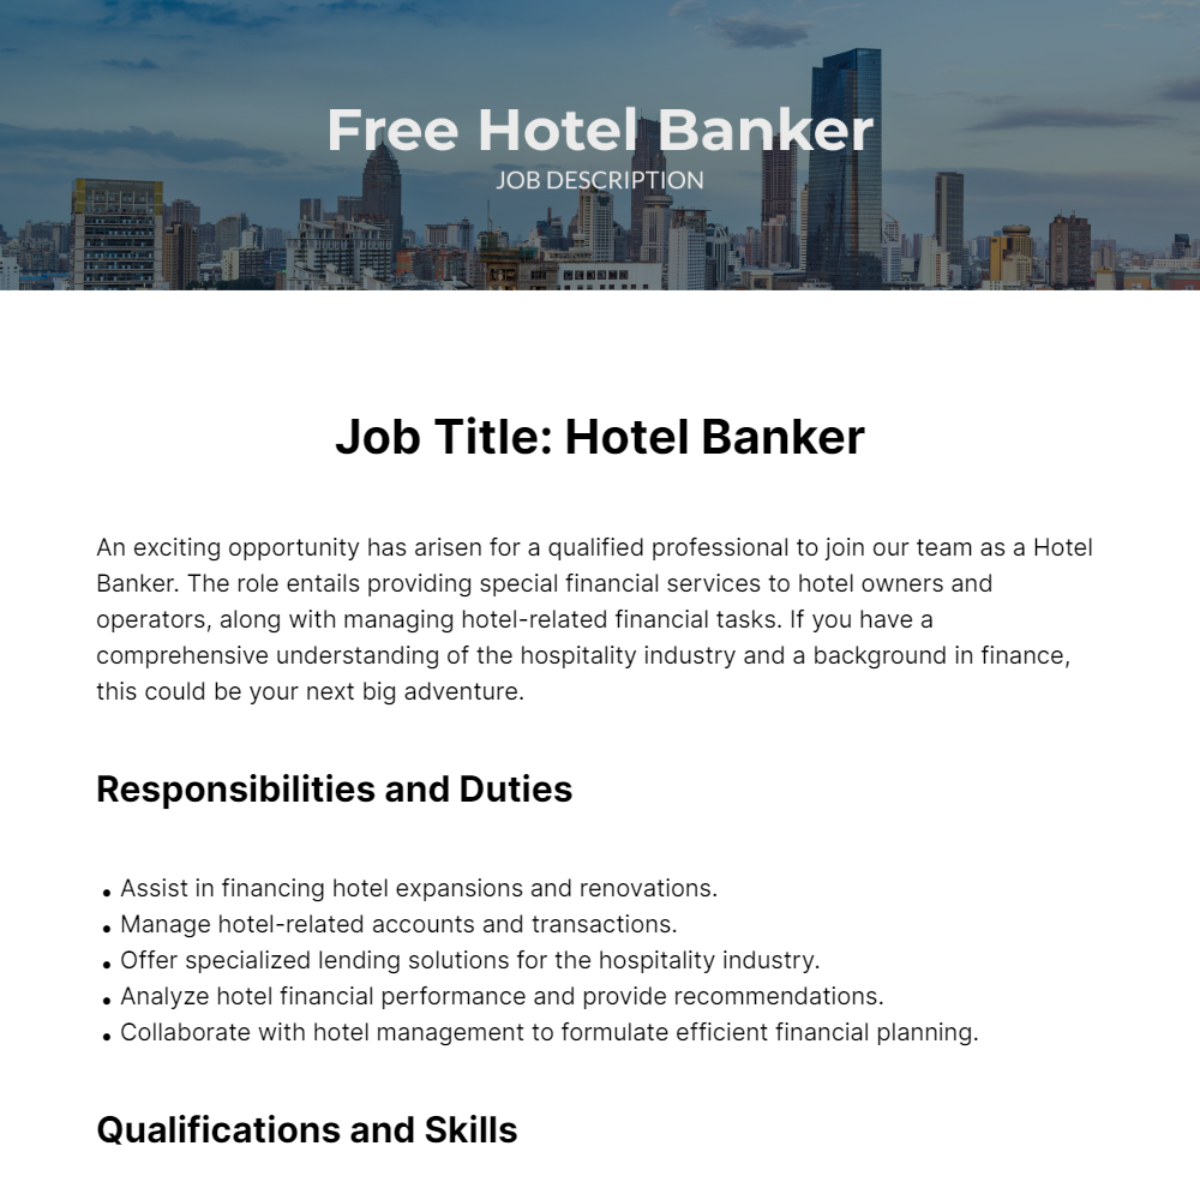 Free Hotel Banker Job Description Template